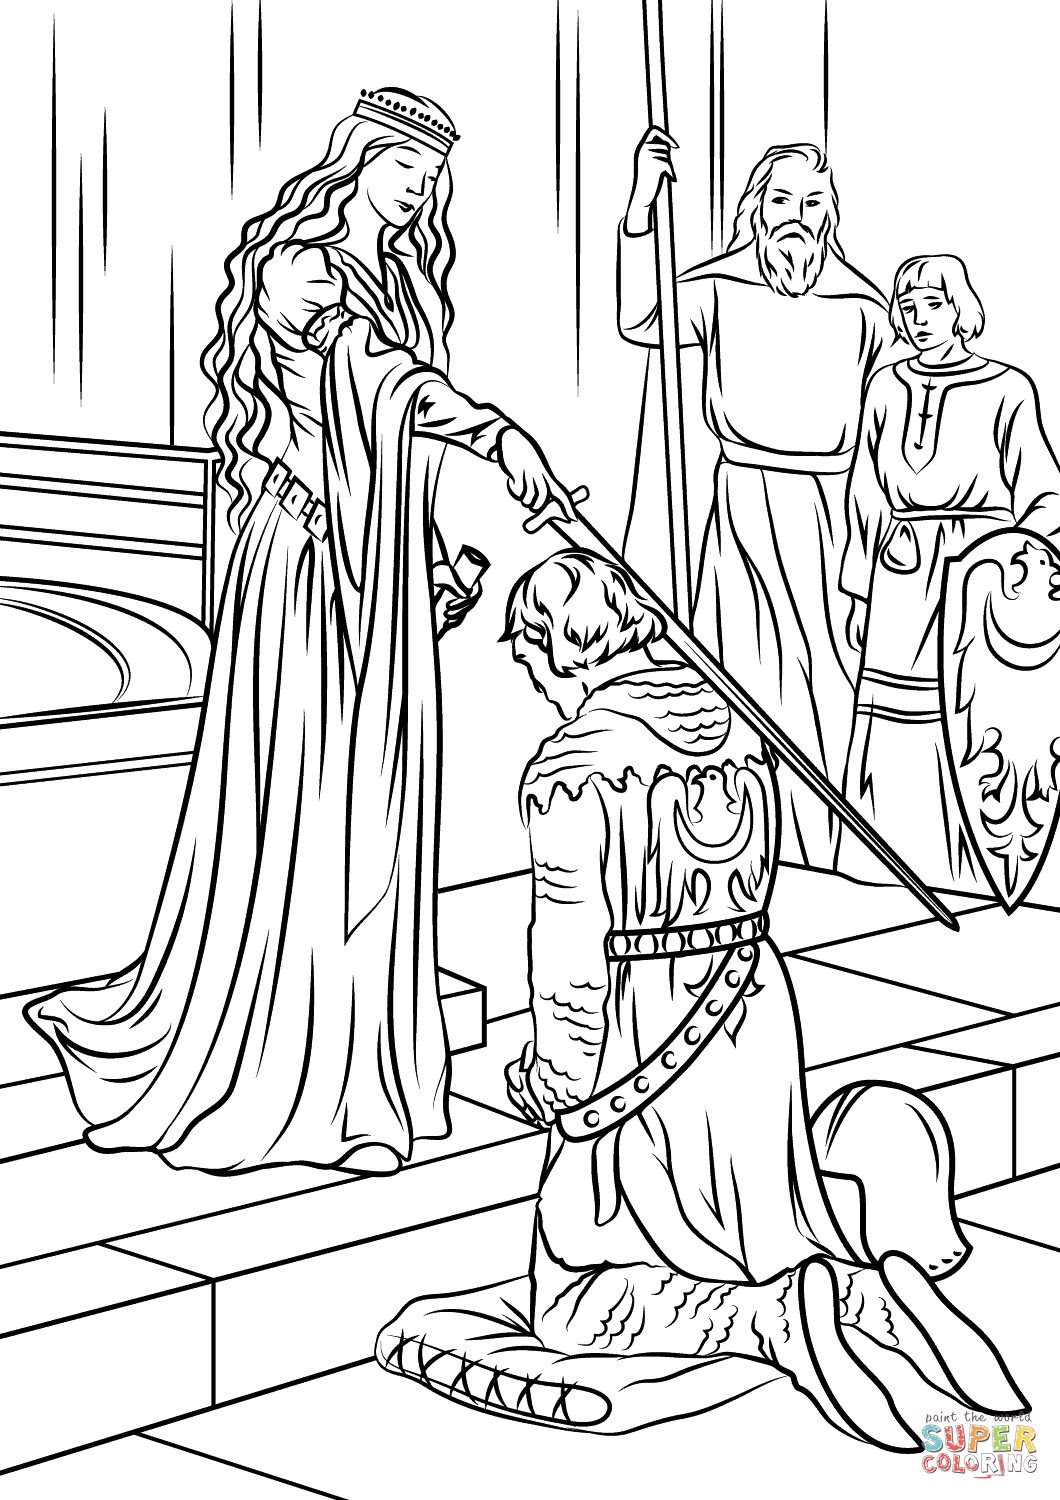 Knight and Princess Coloring Page Wallpaper